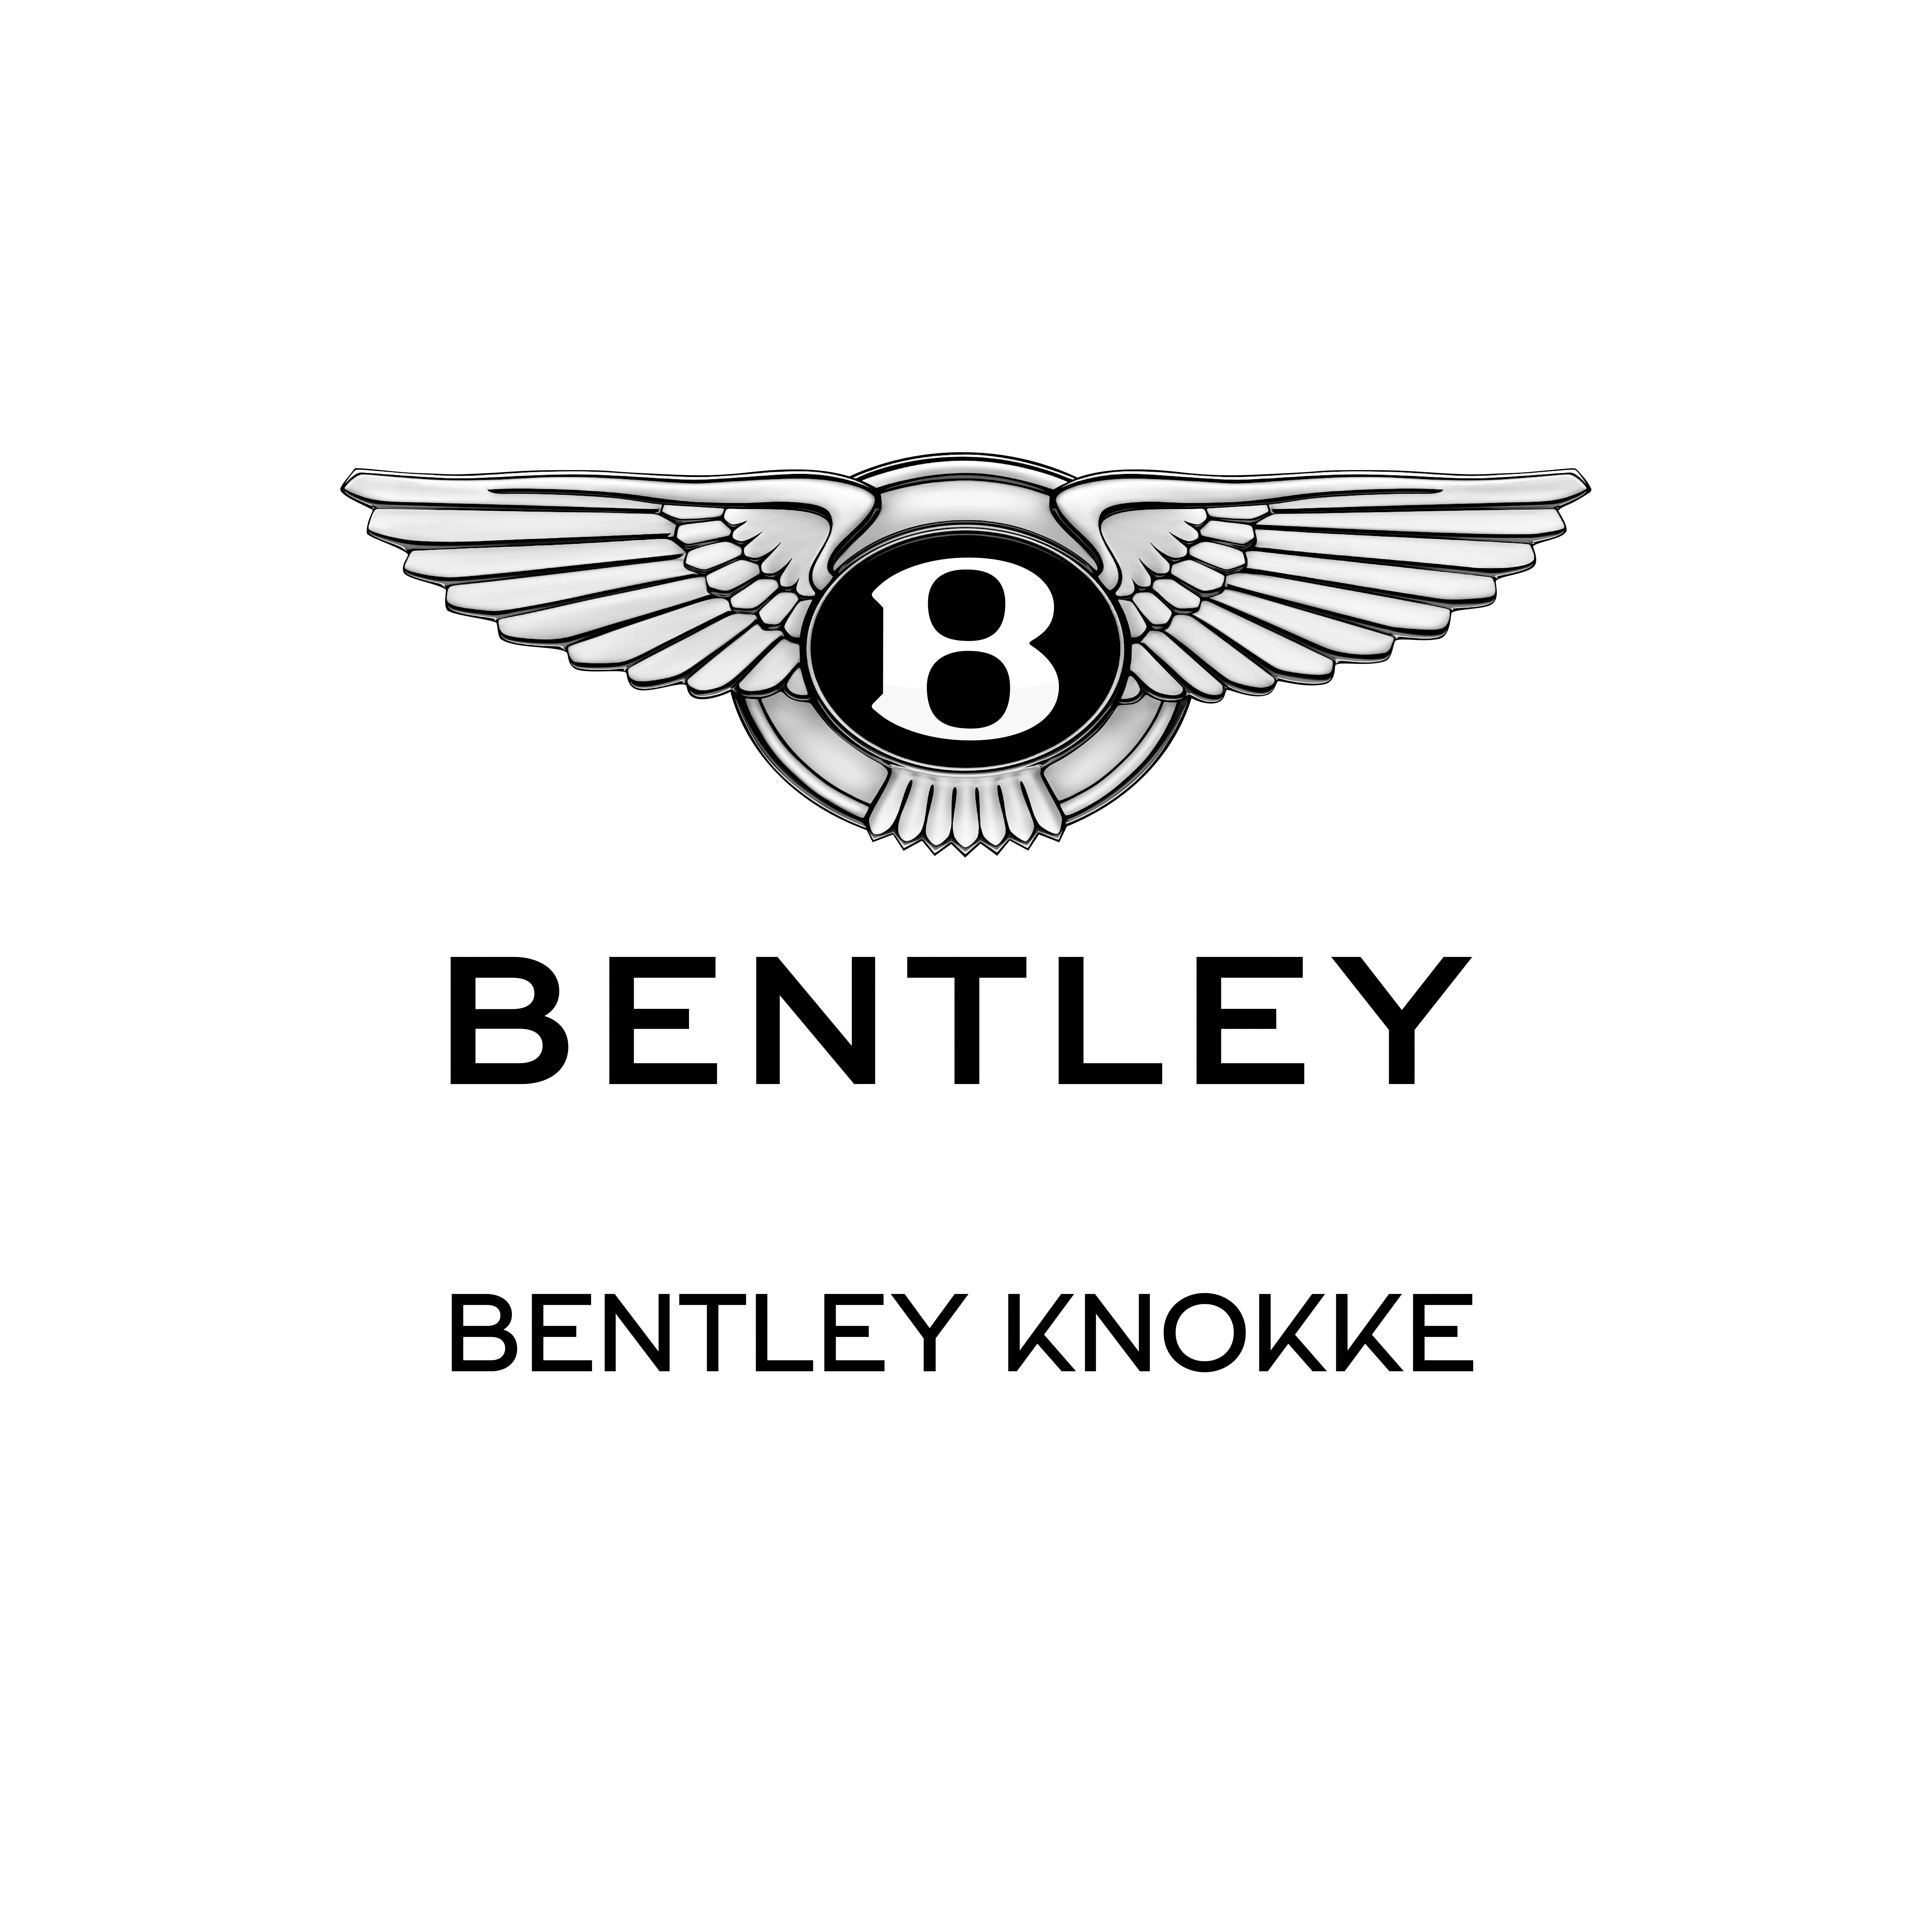 Bentley Knokke